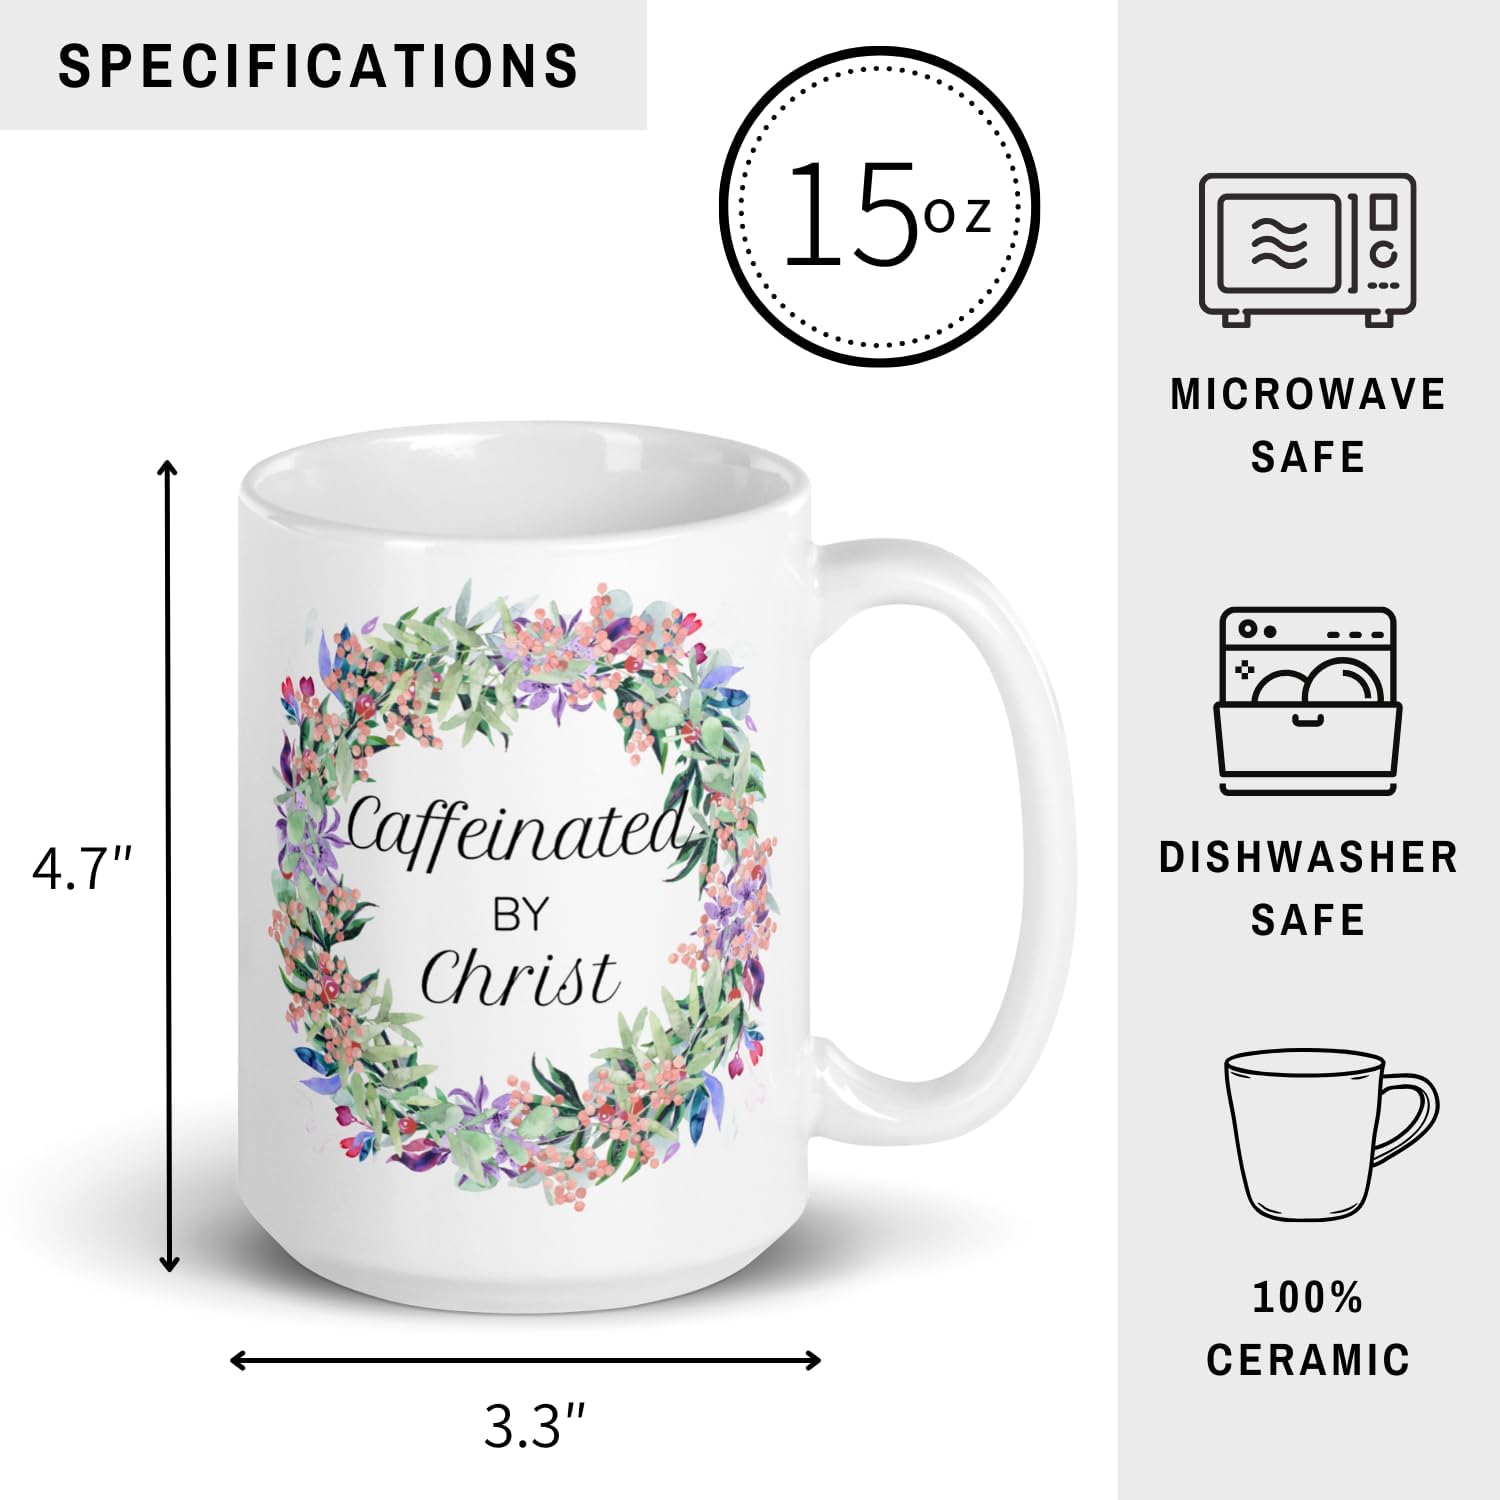 Caffeinated by Christ Christian White Ceramic Mug claimedbygoddesigns